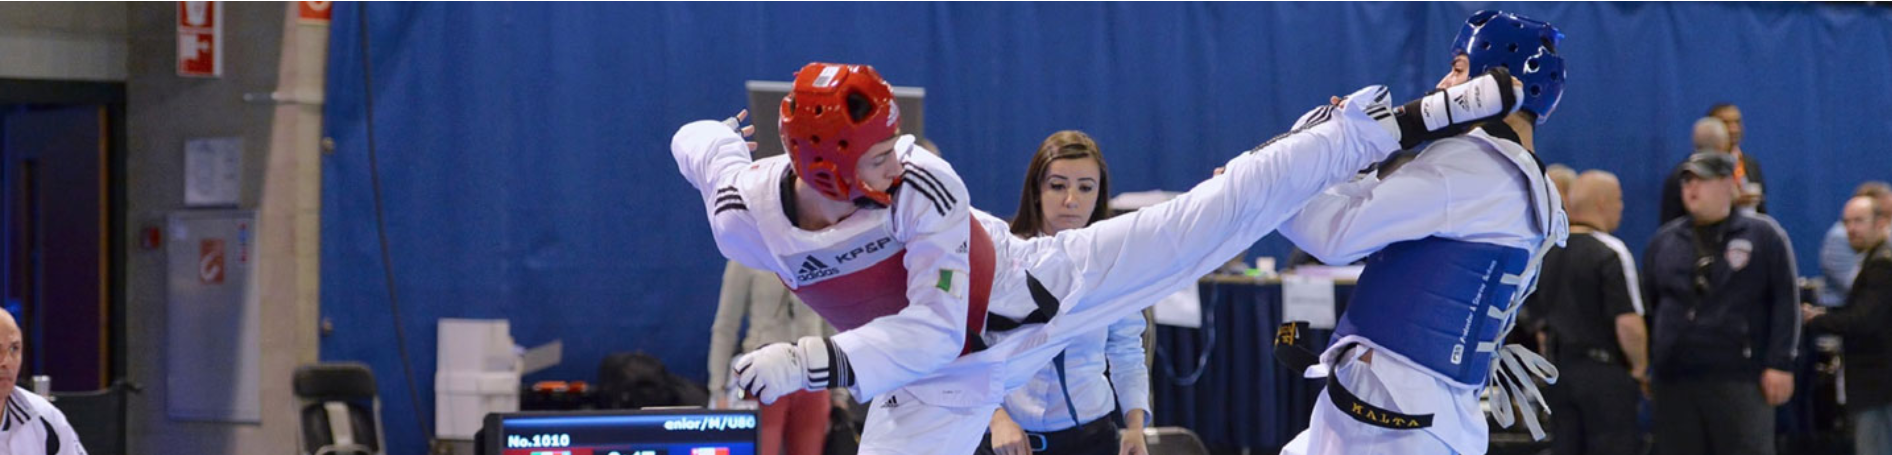 New Zealand will have a nine-strong team at the 2019 World Taekwondo Championships in Manchester ©Taekwondo New Zealand